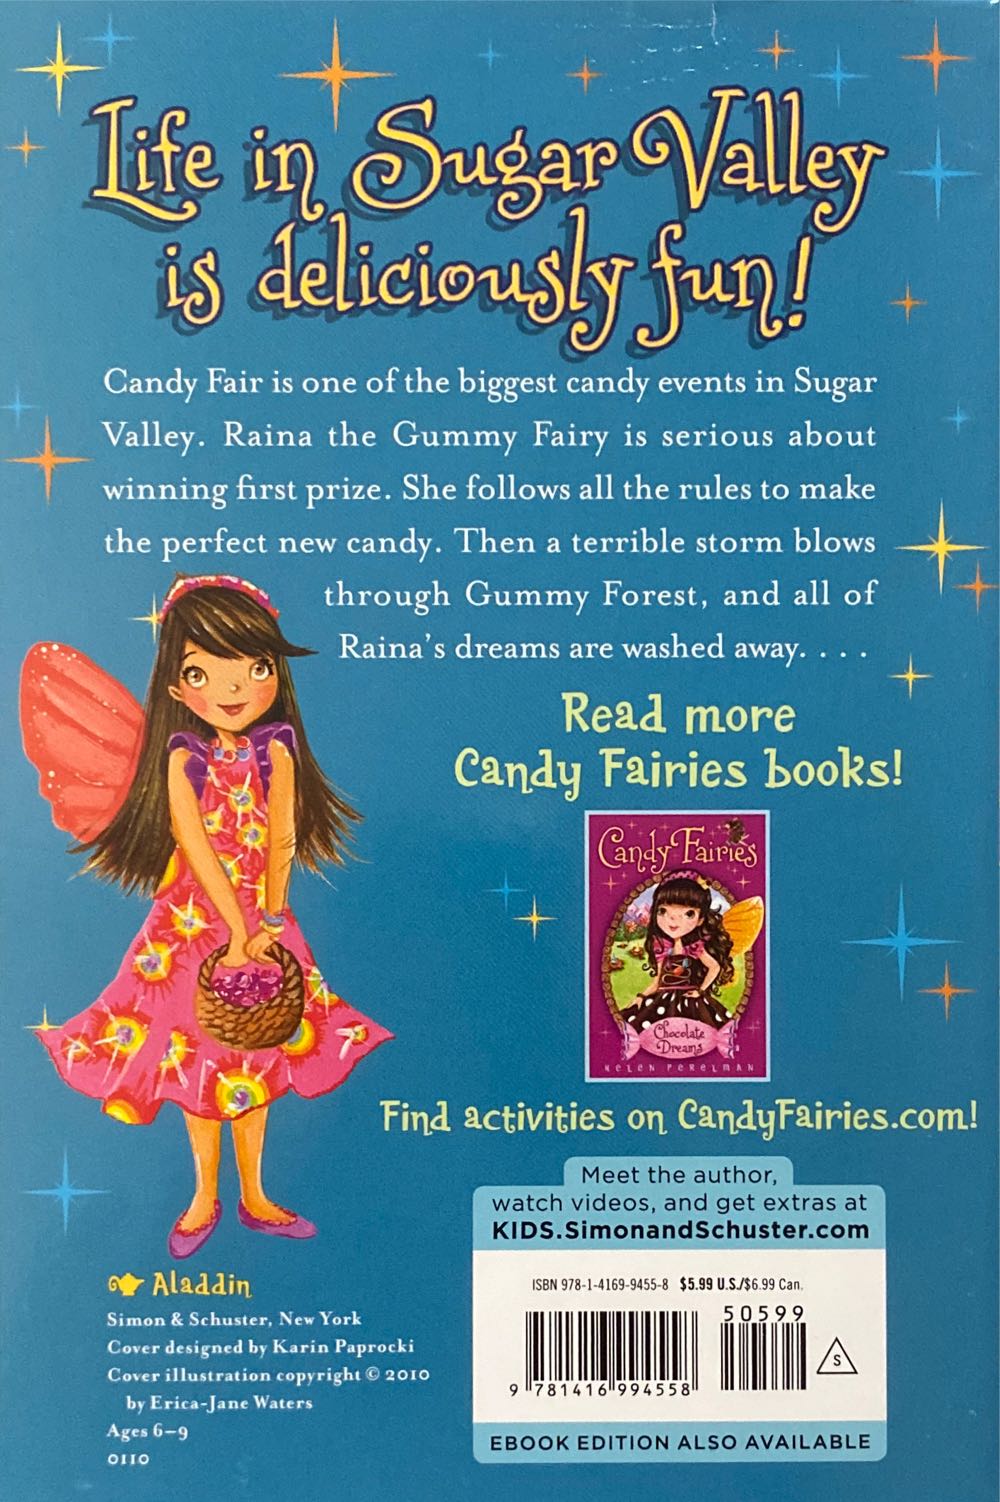 Candy Fairies Rainbow Swirl - Helen Perelman (Pan - Paperback) book collectible [Barcode 9781416994558] - Main Image 2